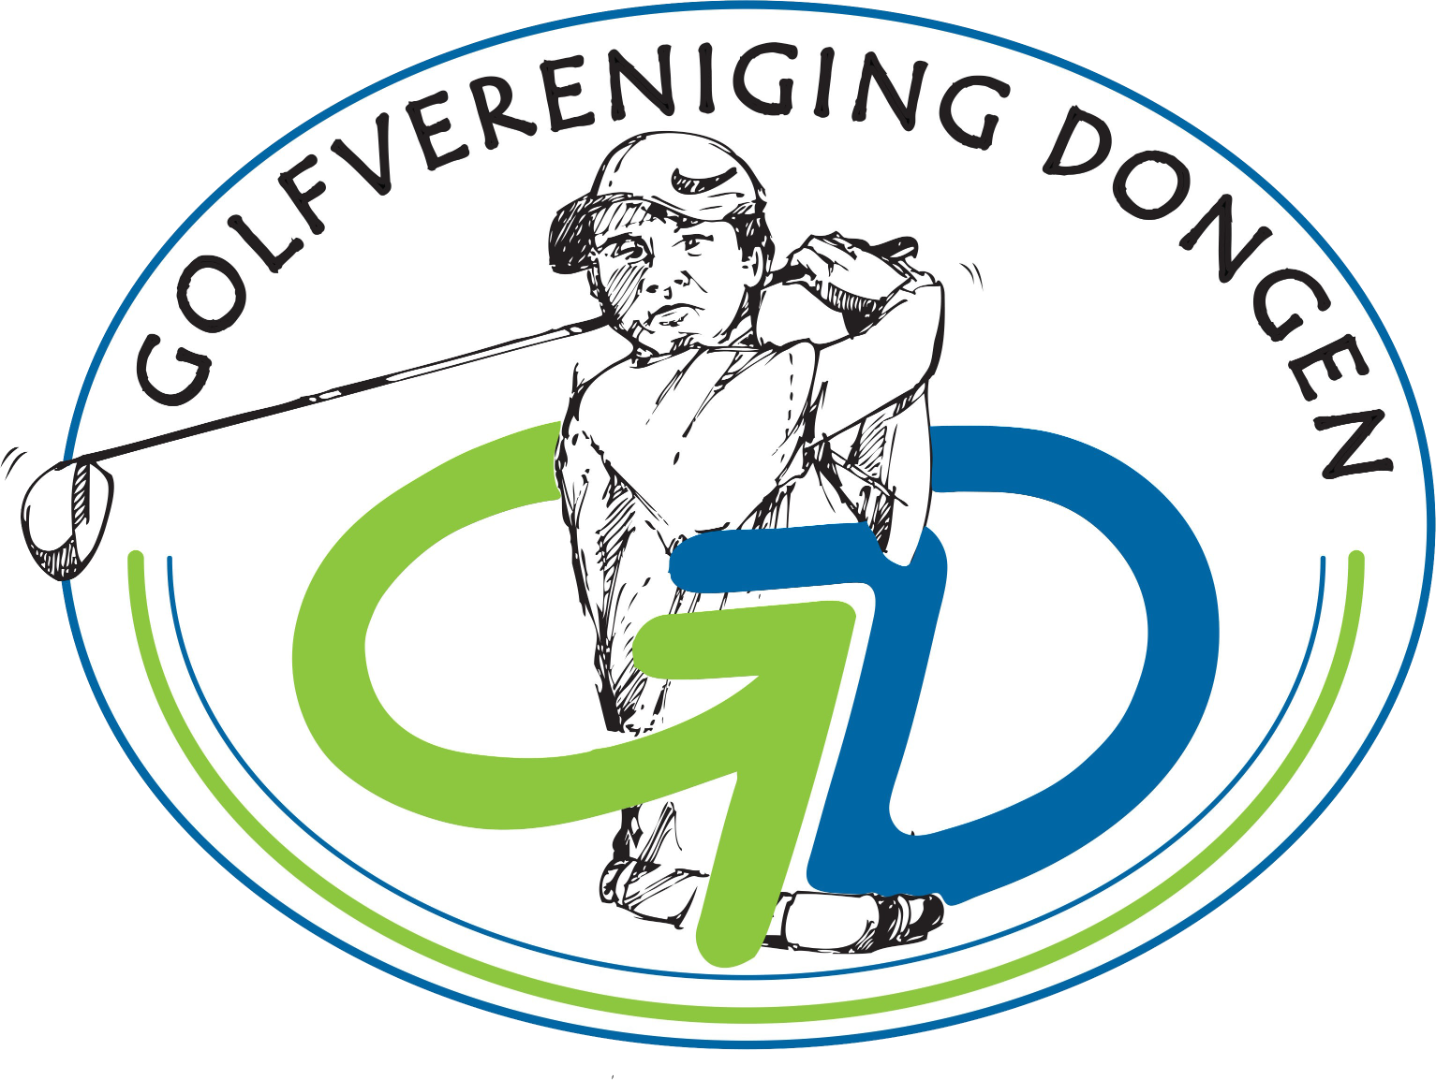 Golfvereniging Dongen - Logo